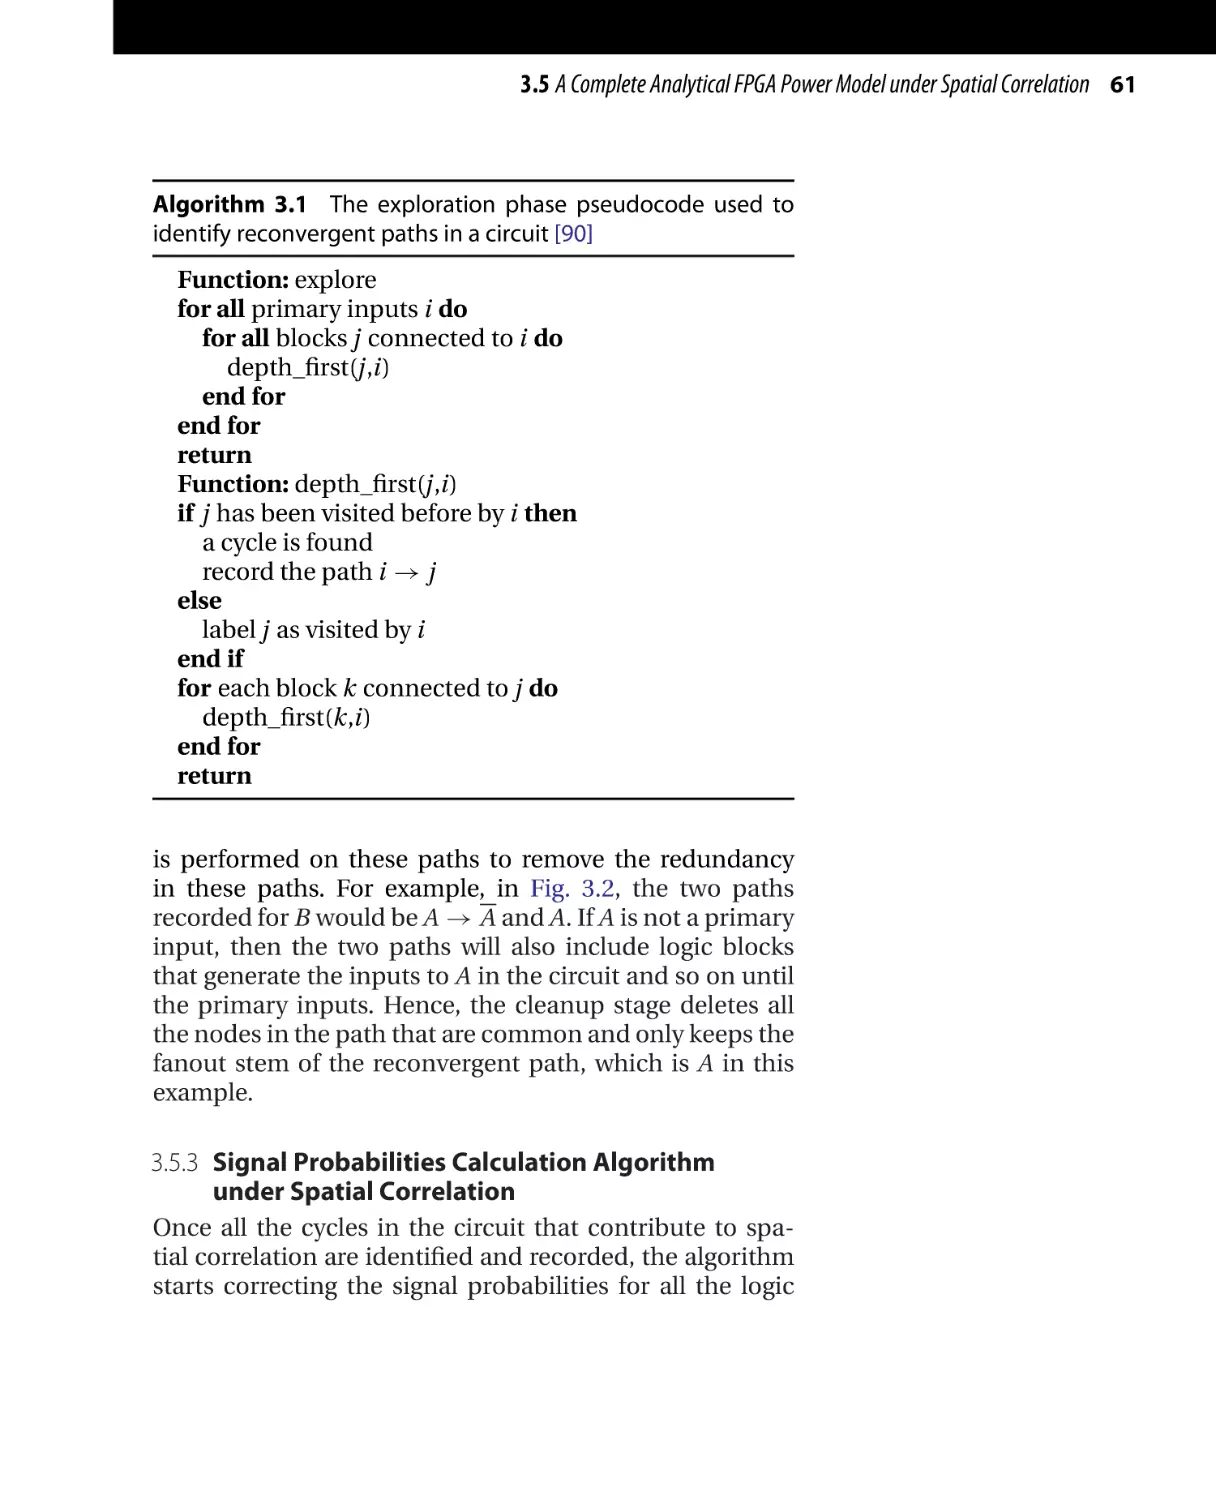 Signal Probabilities Calculation Algorithm under Spatial Correlation